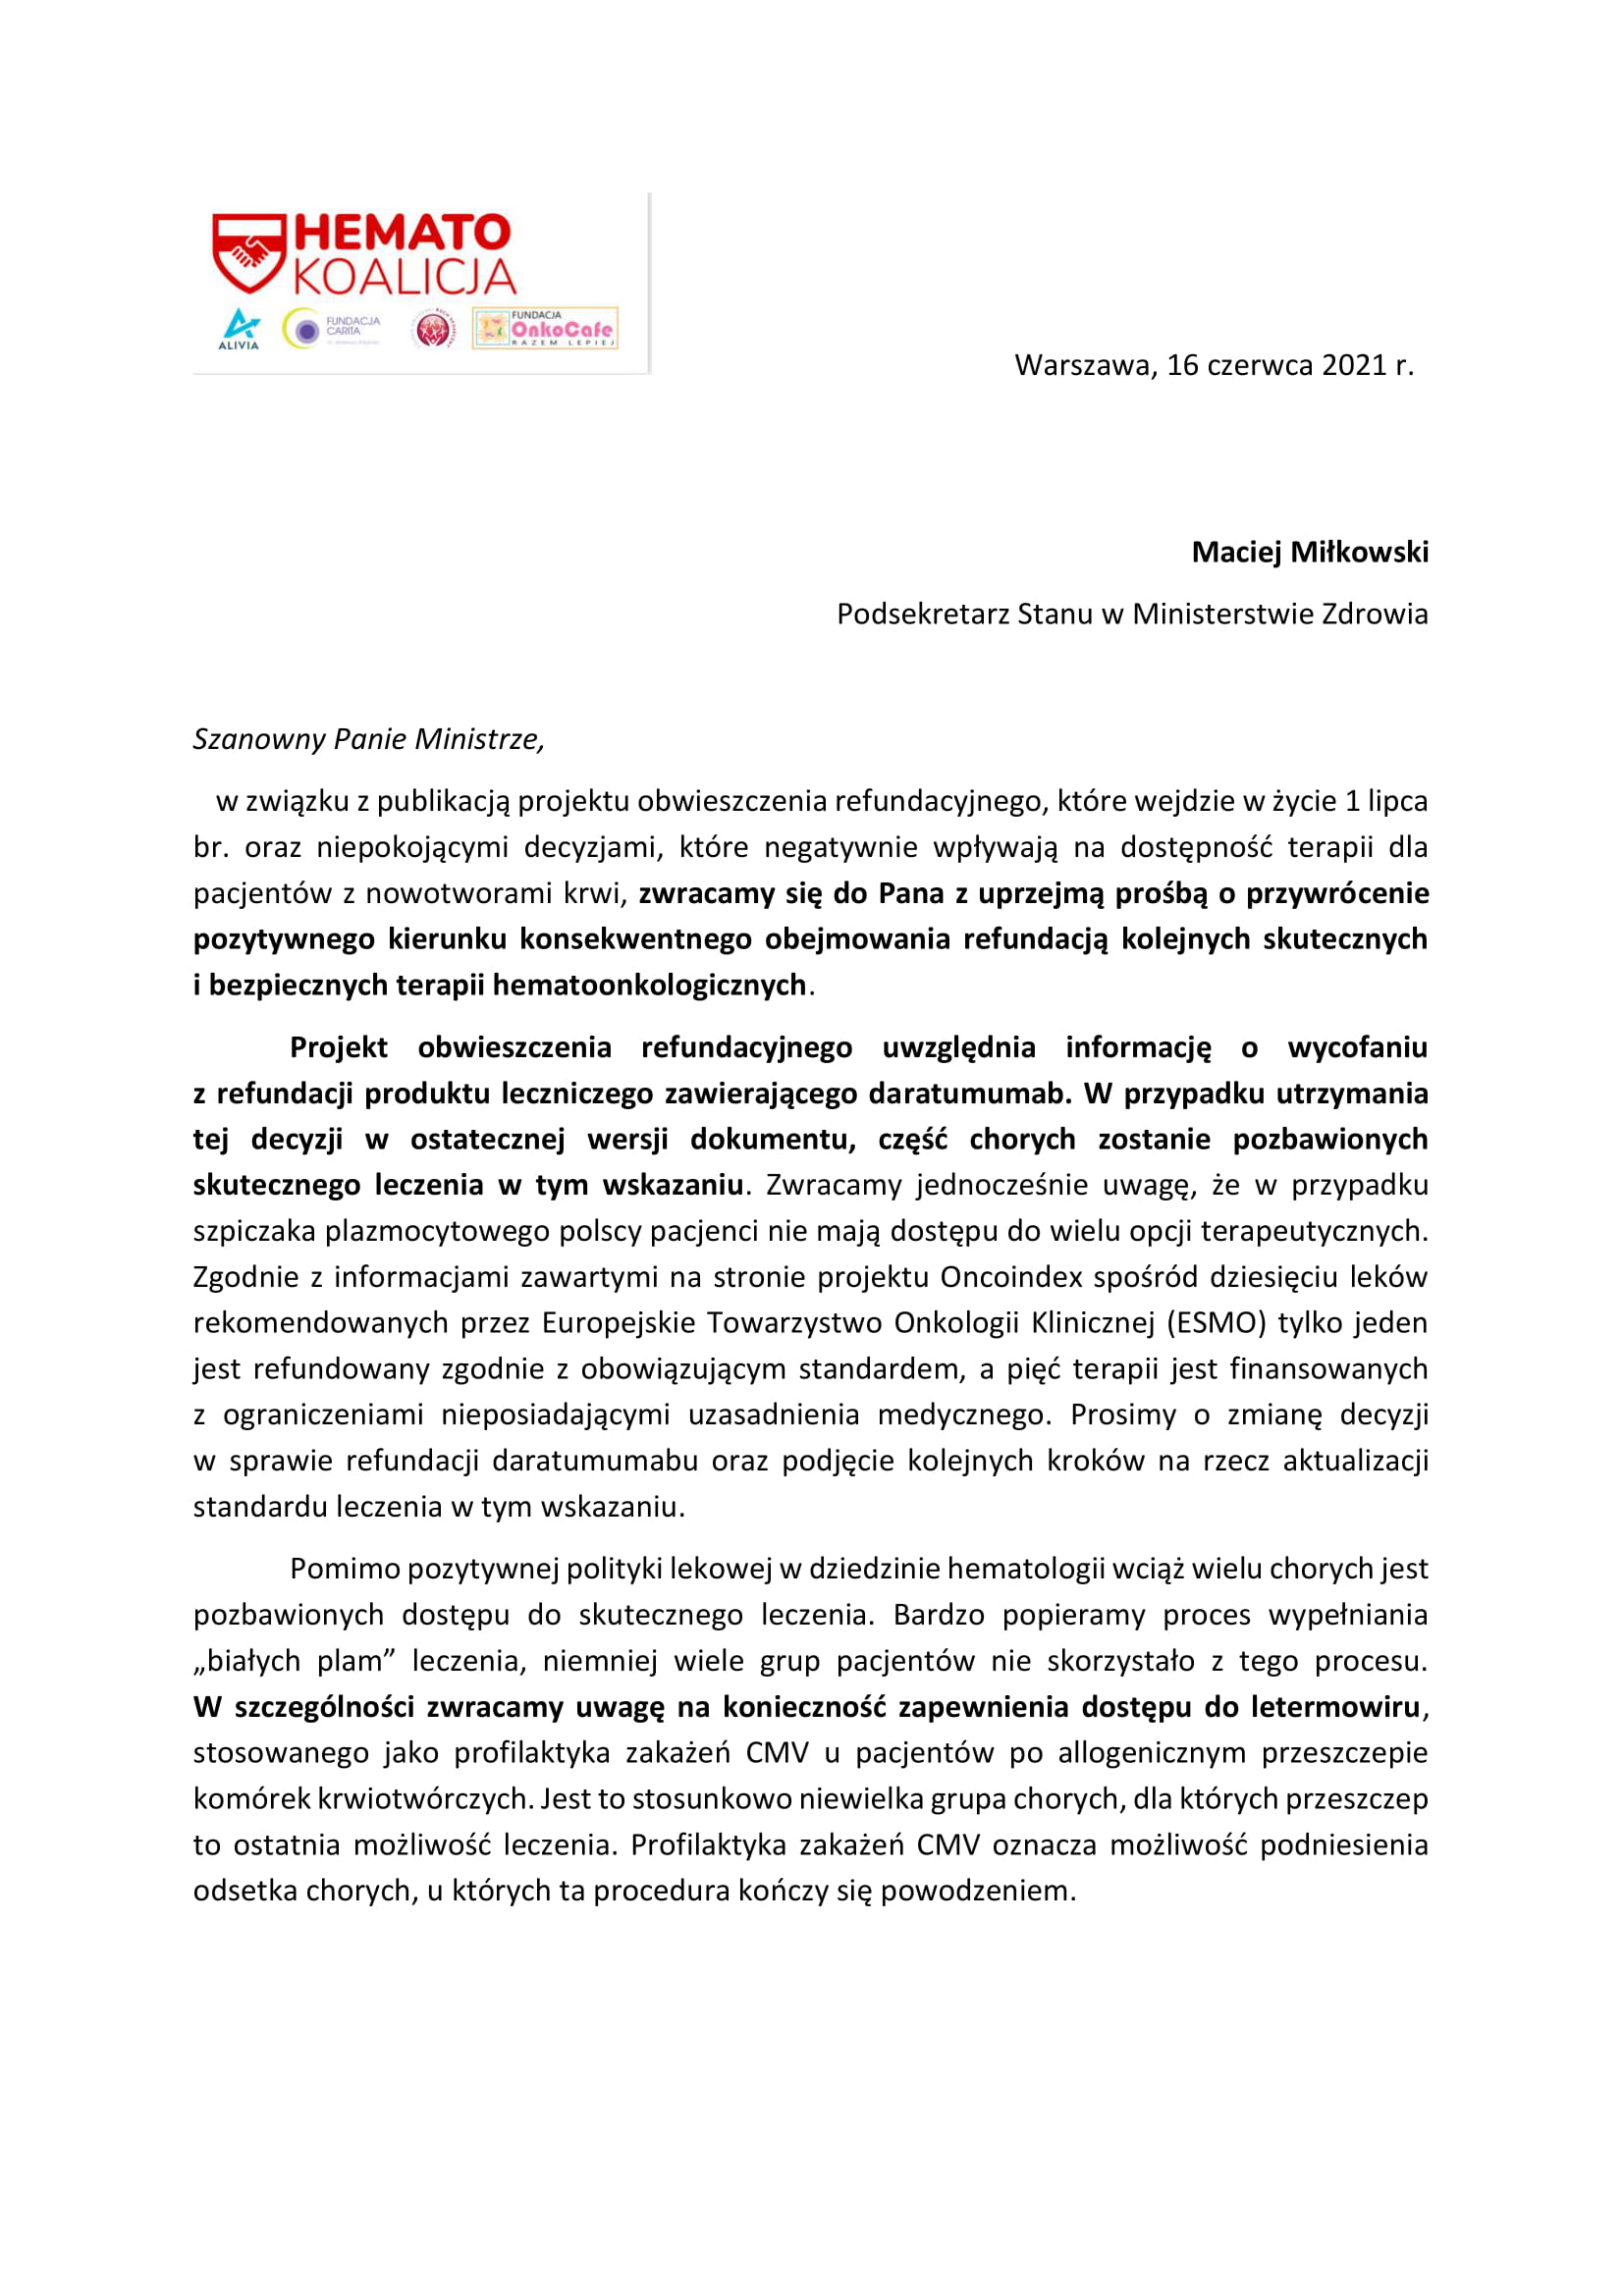 Hematoonkologia zmiany pismo HematoKoalicja16 06 2021.pdf 1